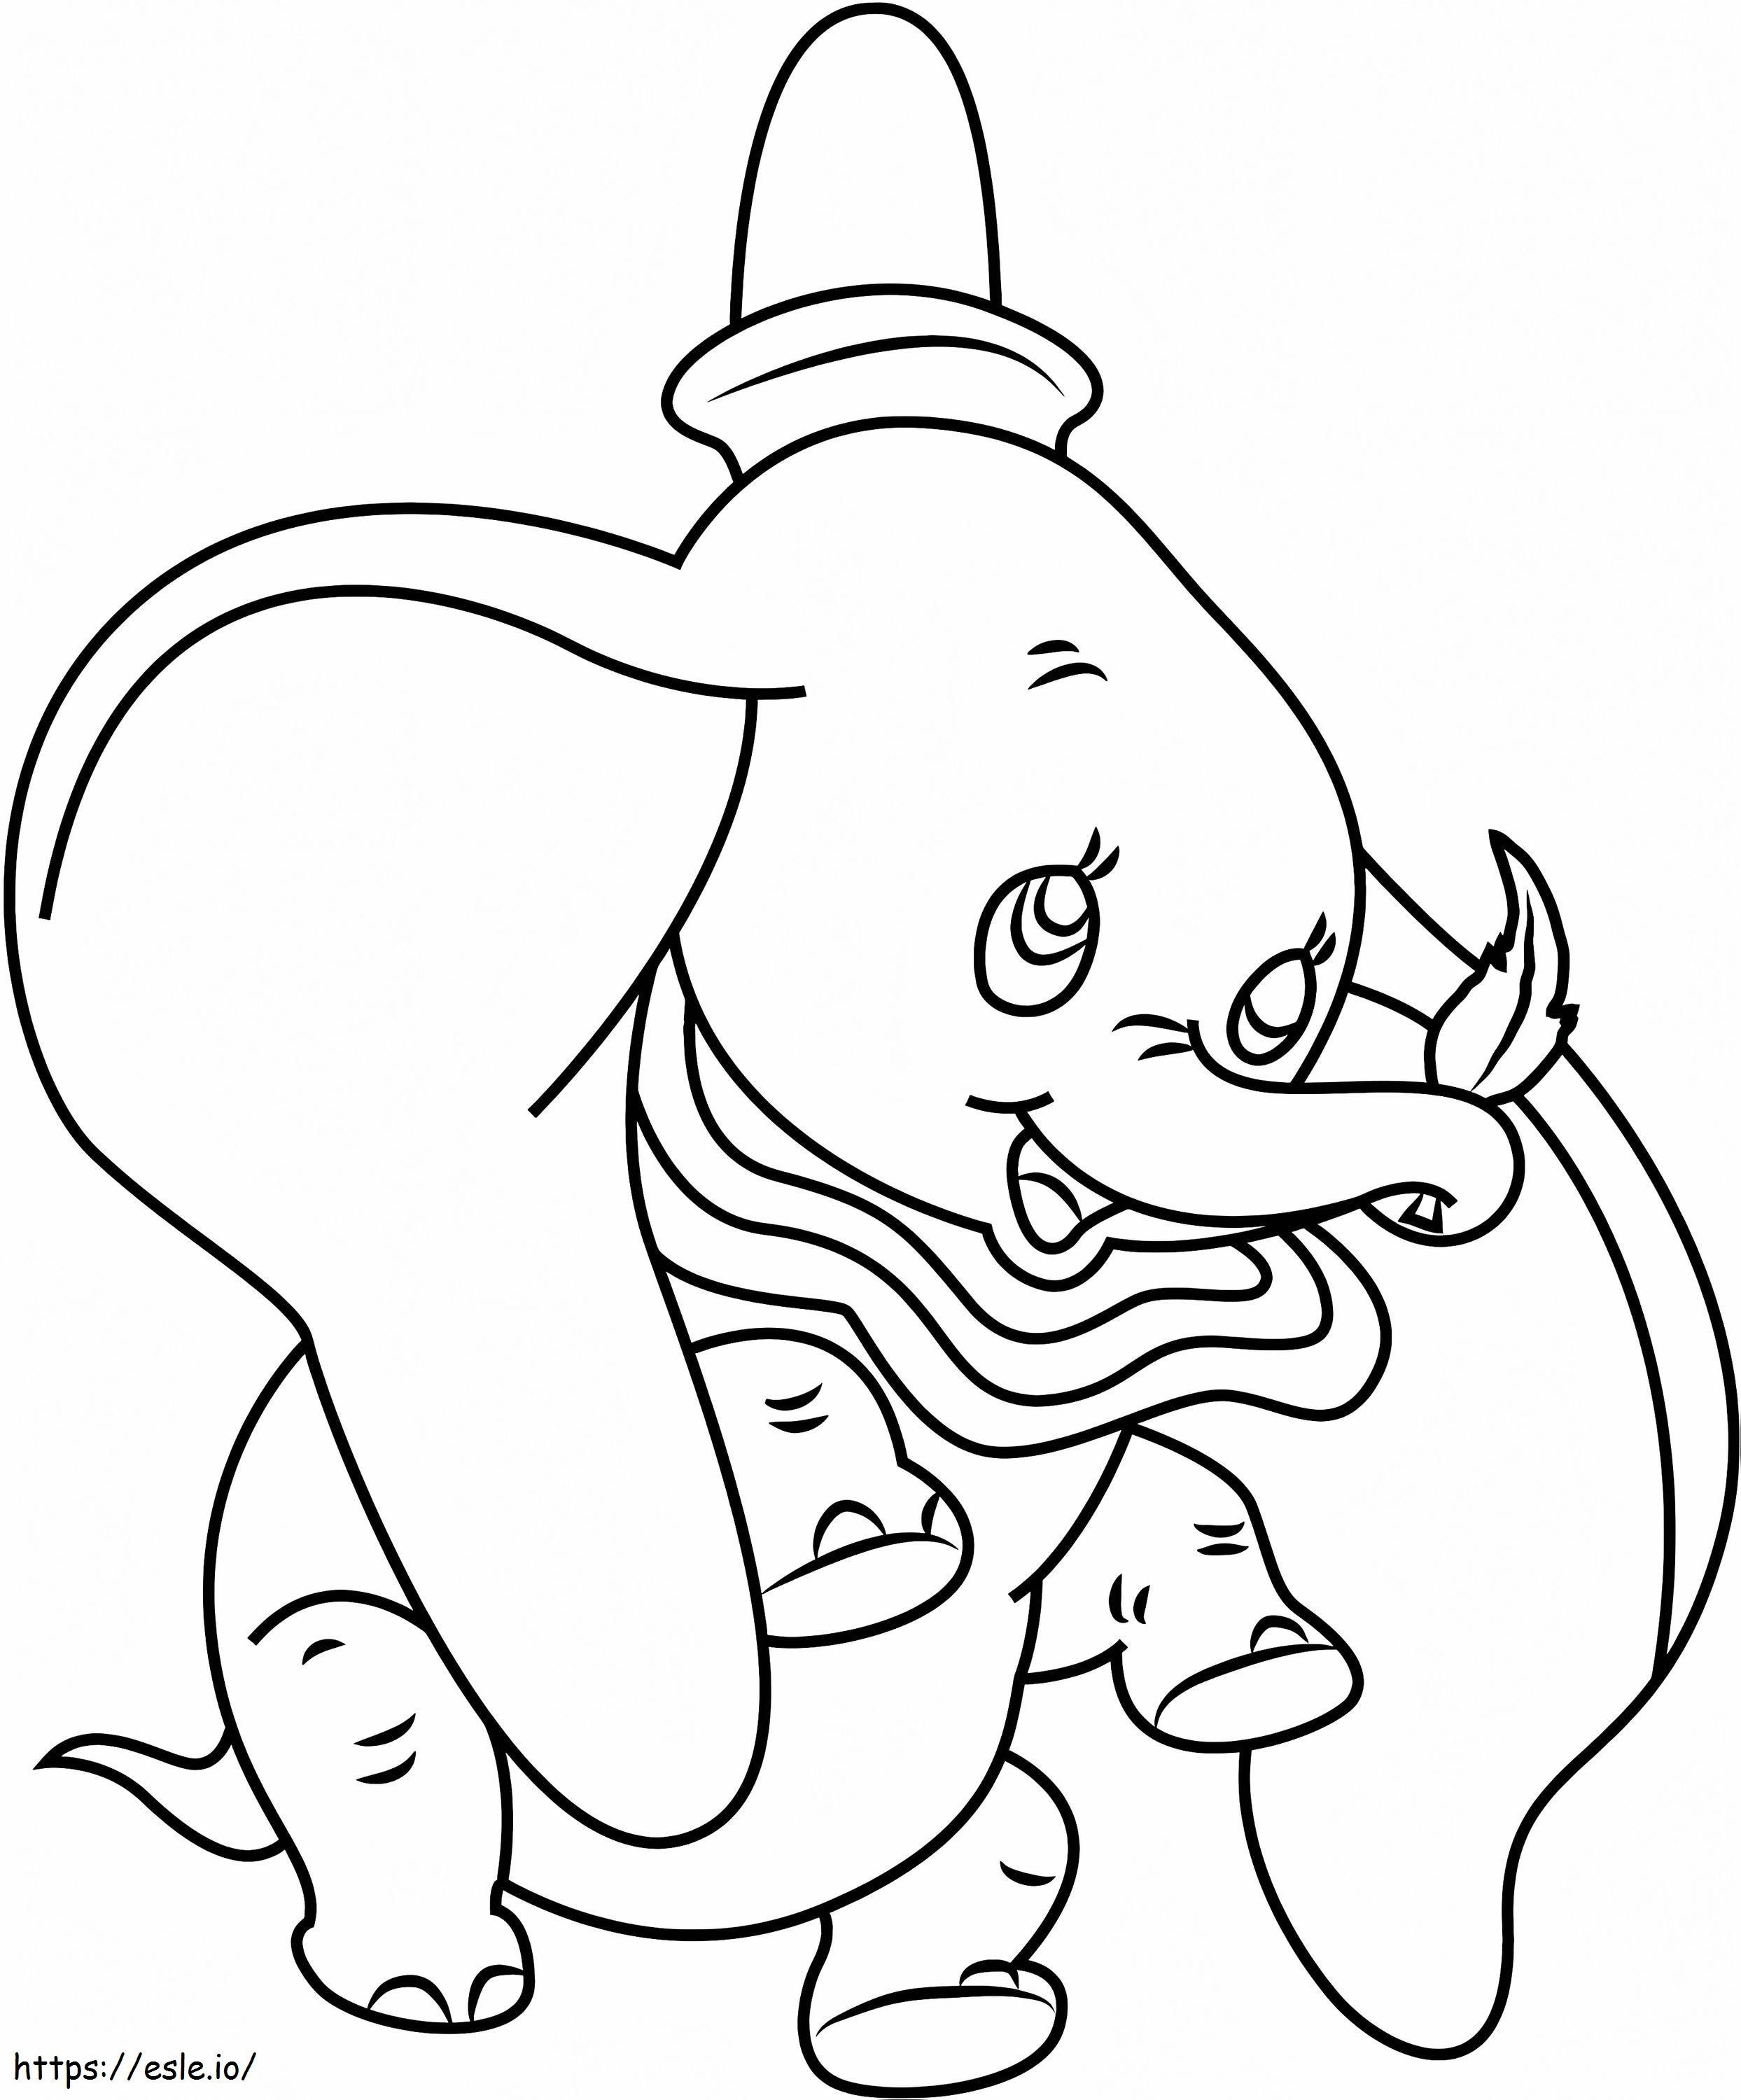 1530929502 Dumbo Segurando Folha A4 para colorir